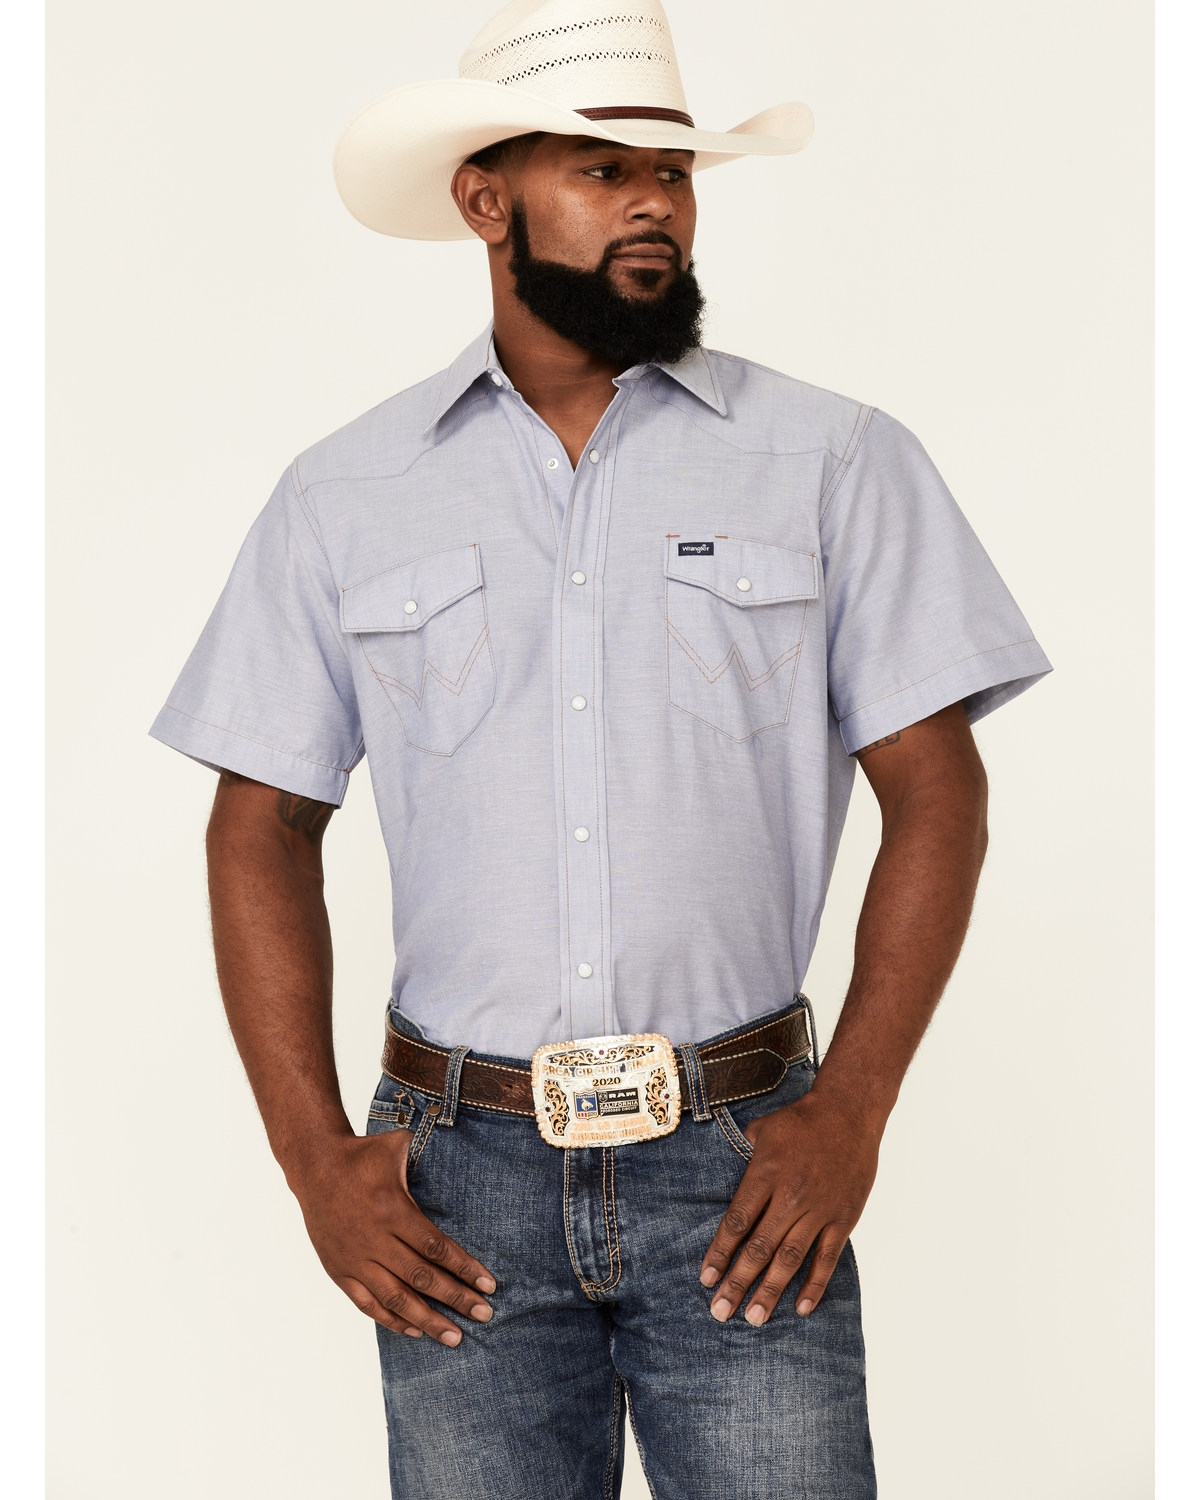 Wrangler Men's Chambray Rigid Cowboy Cut Short Sleeve Pearl Snap Work Shirt